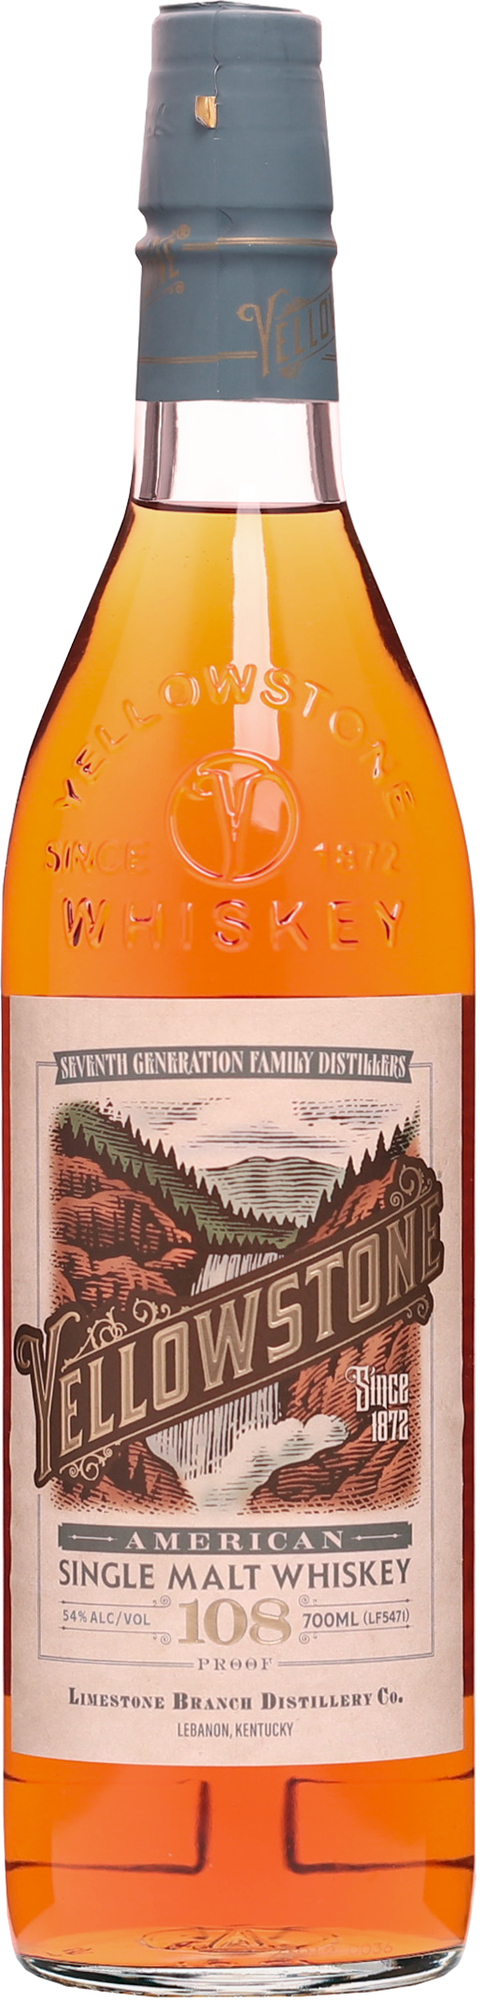 Yellowstone Single Malt Whiskey 54% 0,7l